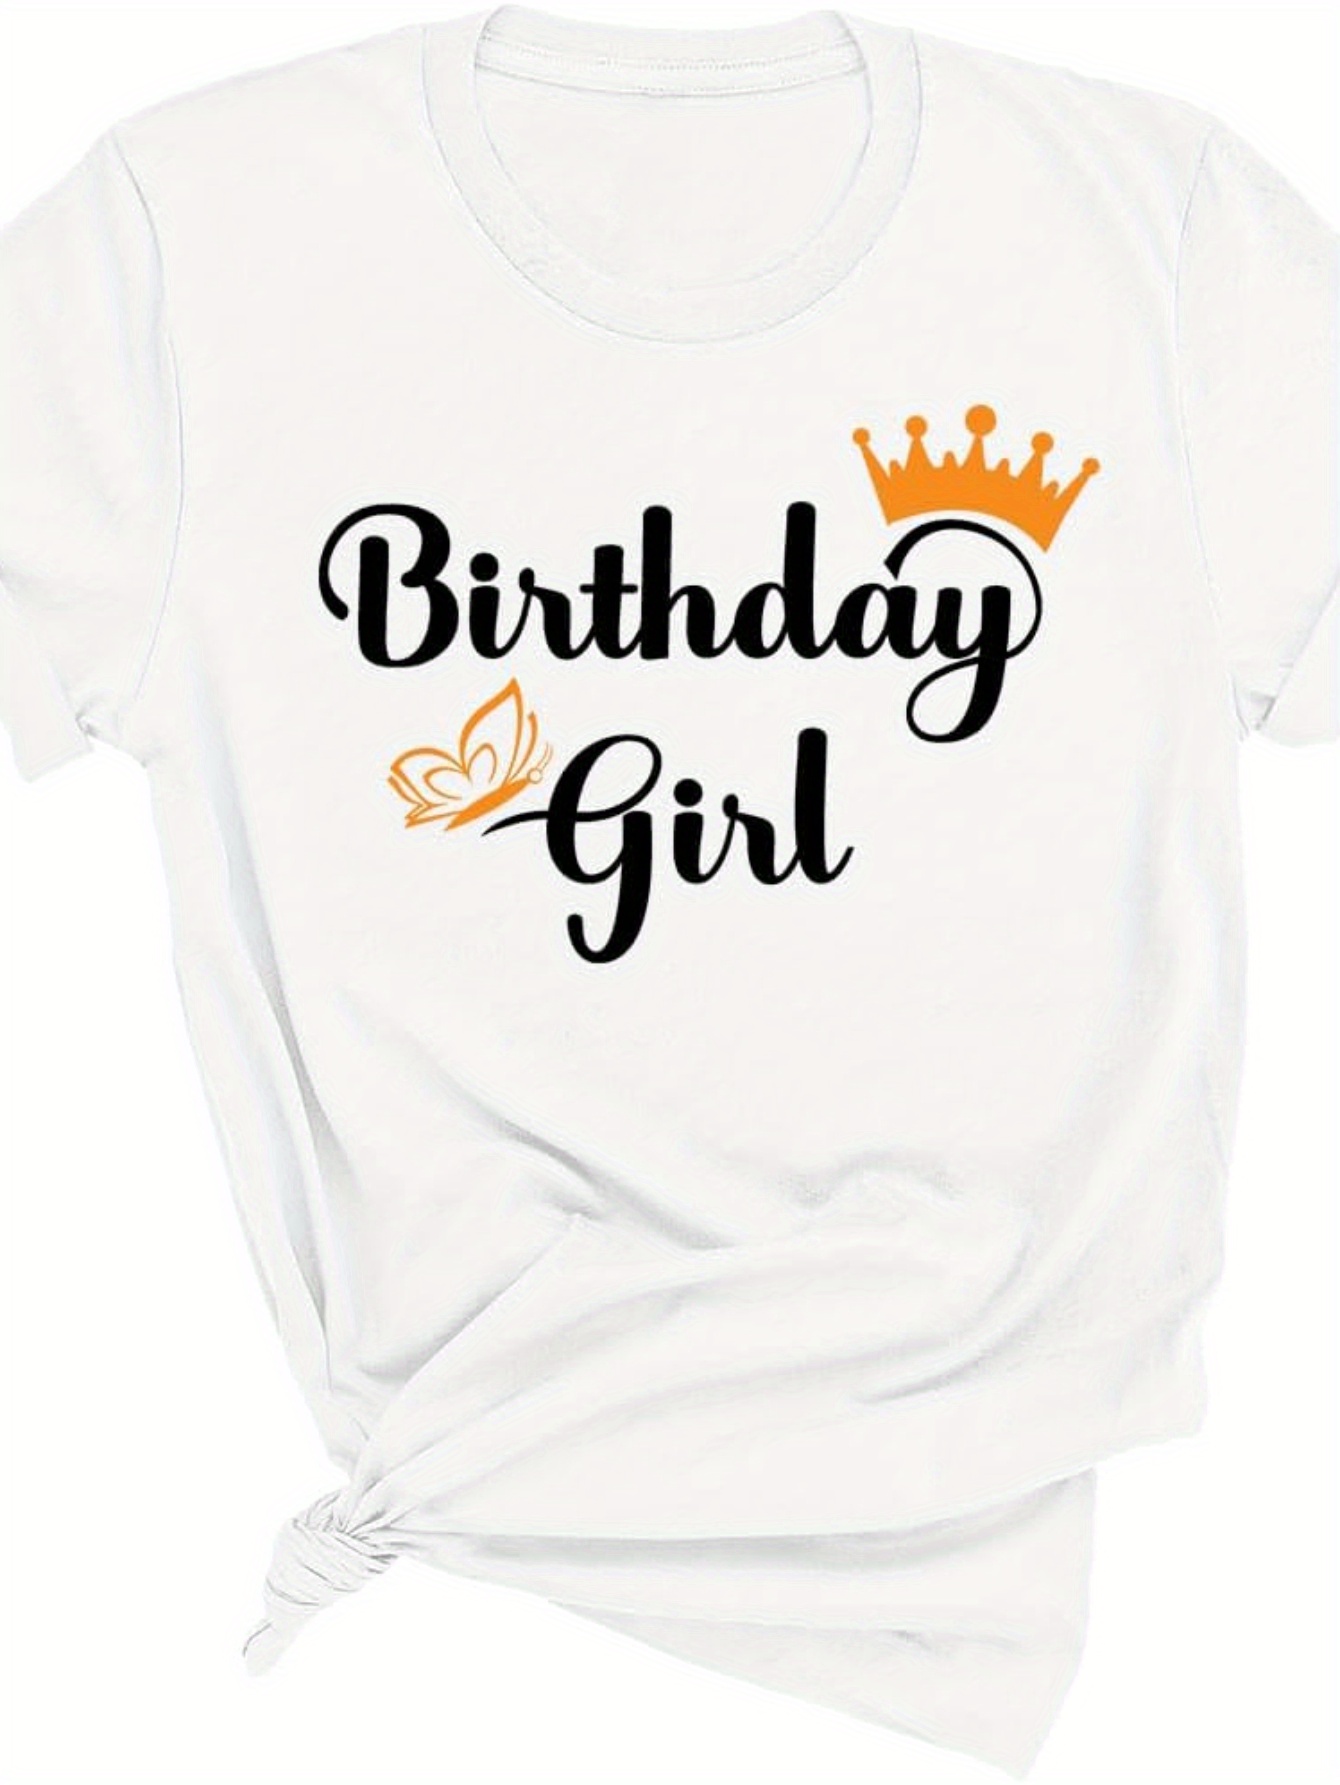 Birthday Girl Shirts - Happy Birthday Girl T-shirt - Girls Birthday ...